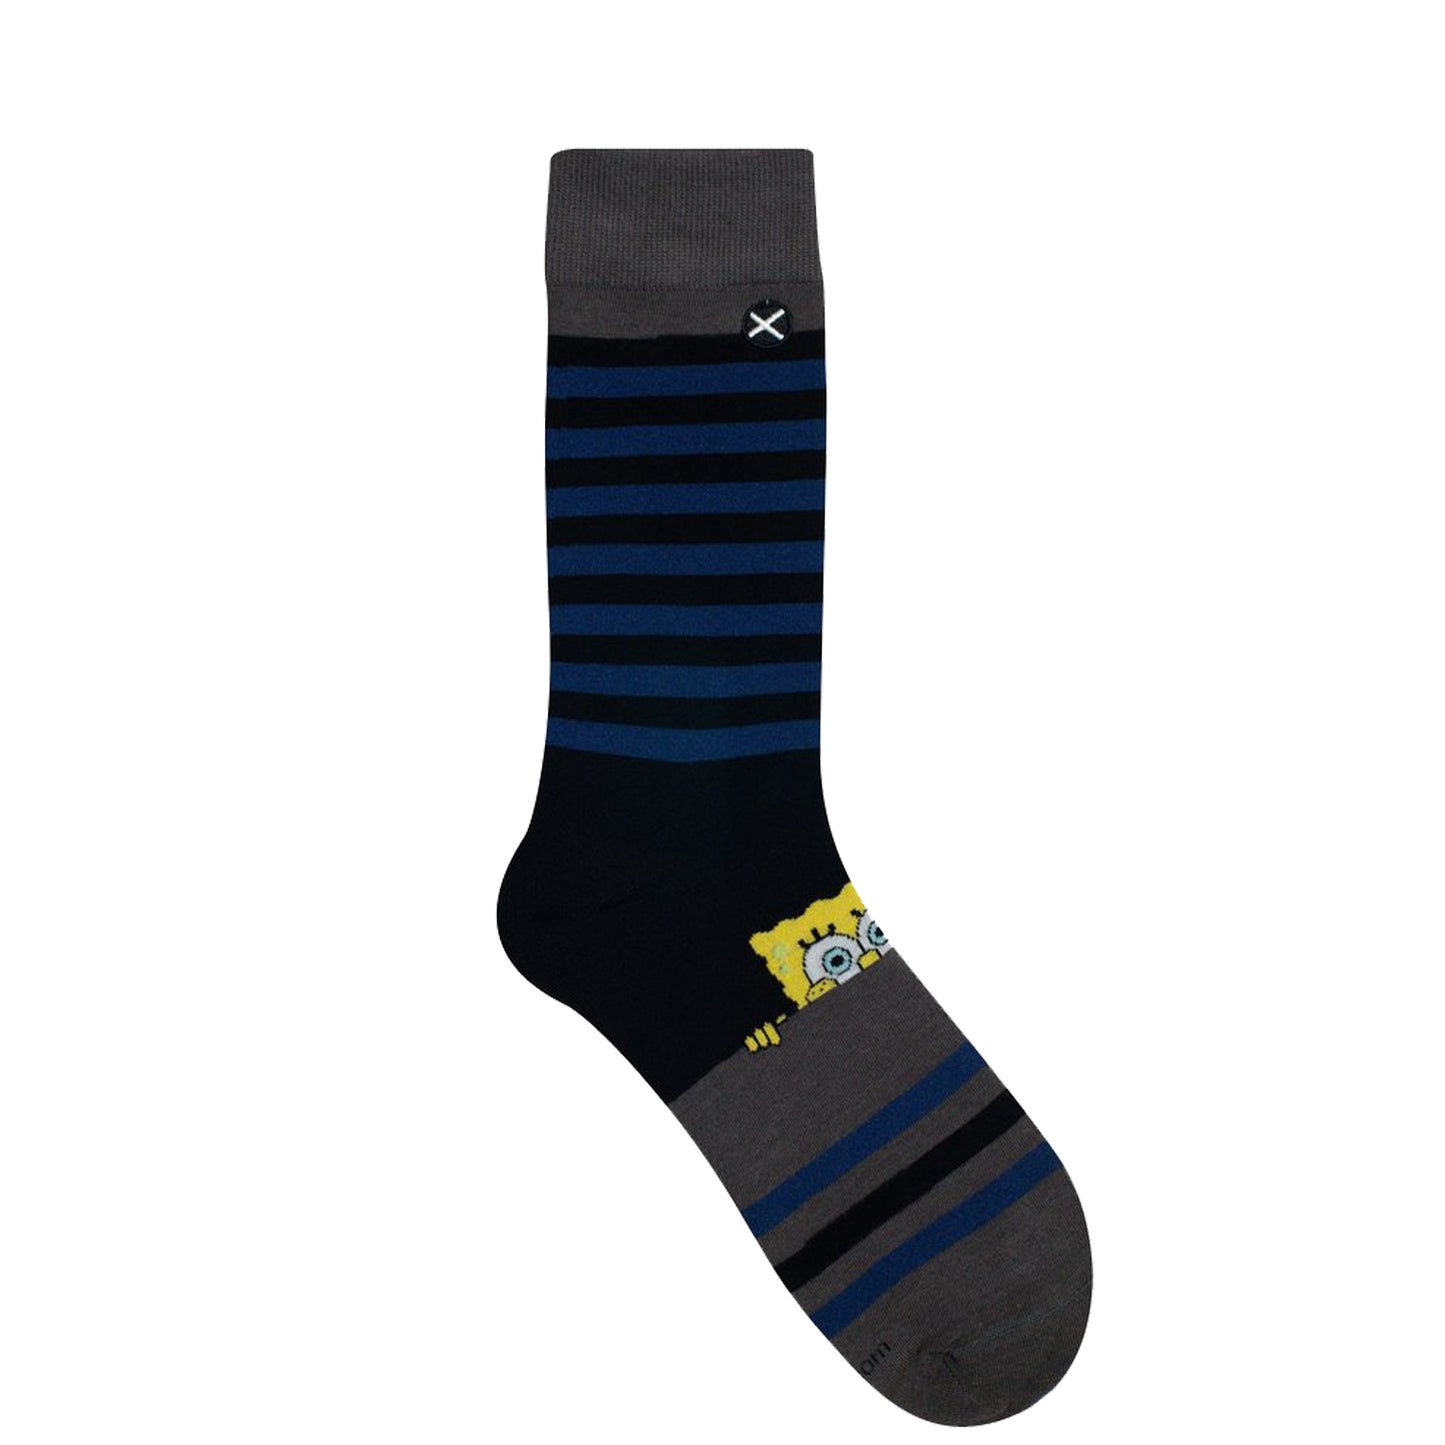 Odd Sox Men's Dress Socks - SnoopBob (Spongebob Squarepants)